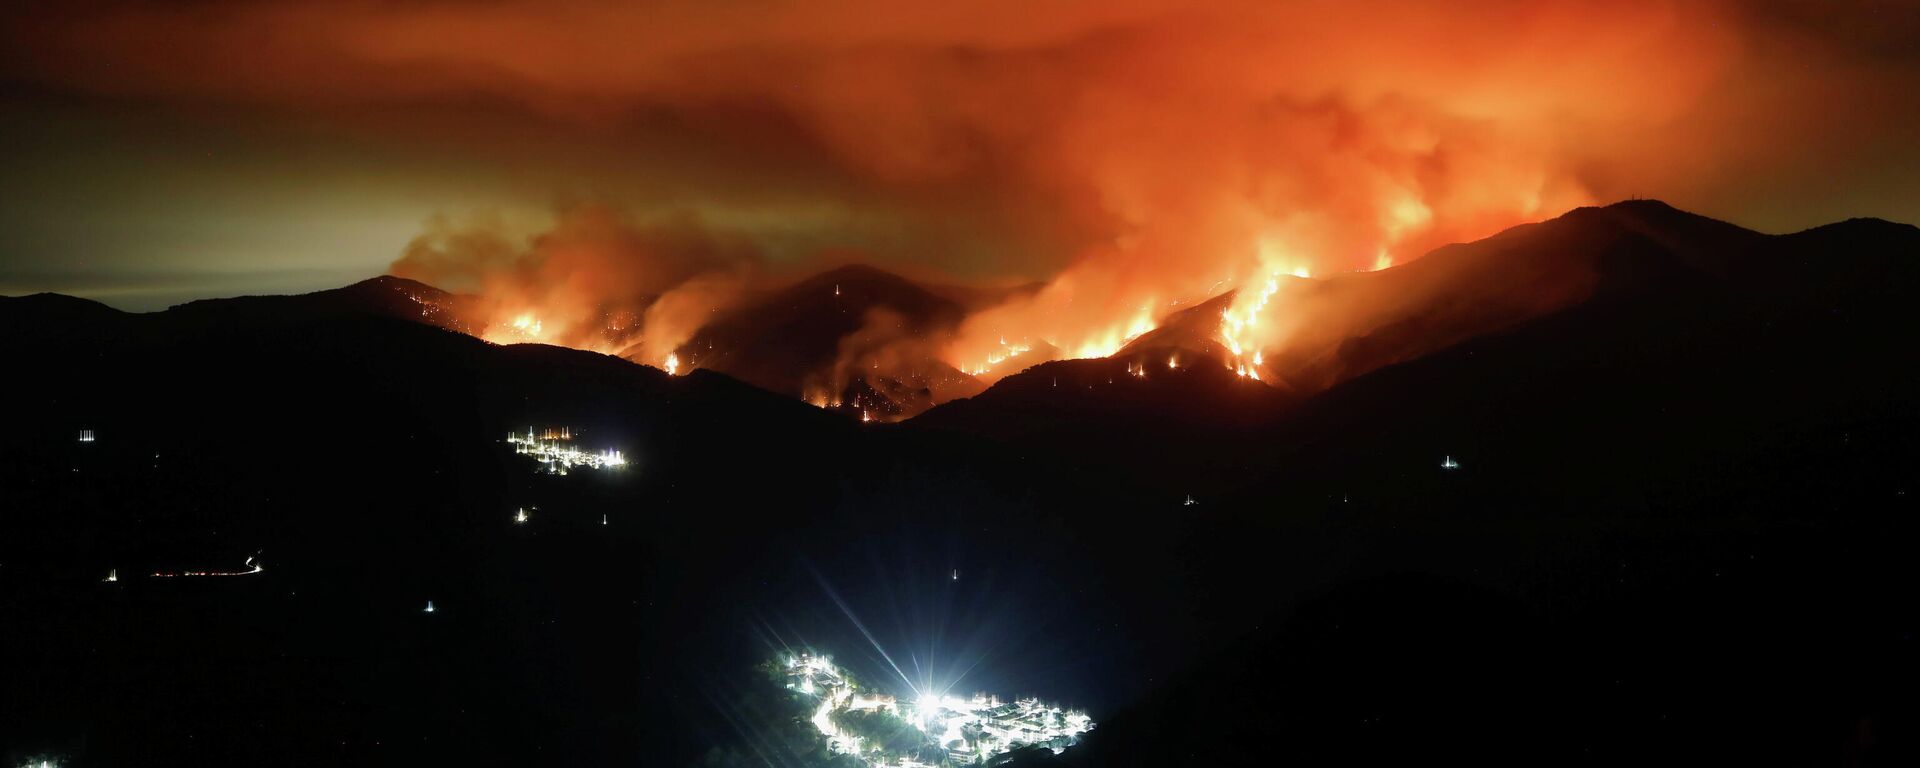 Incendios forestales en Sierra Bermeja, España - Sputnik Mundo, 1920, 14.09.2021